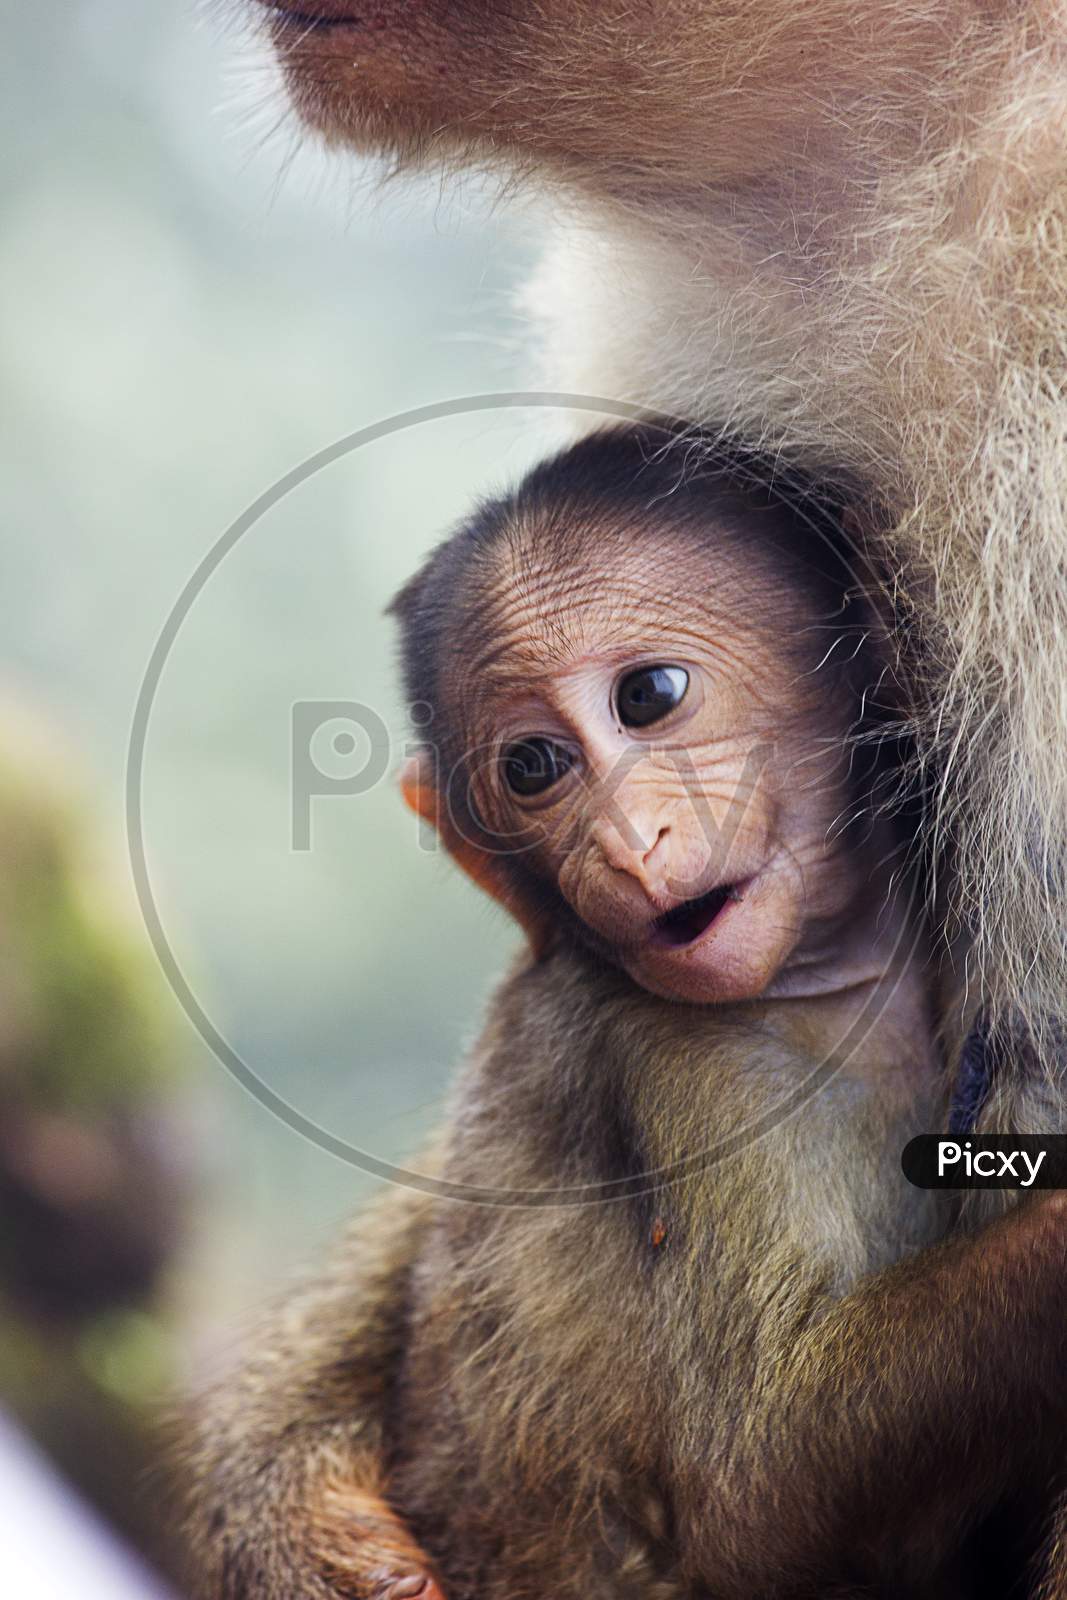 A Child Monkey with Monkey